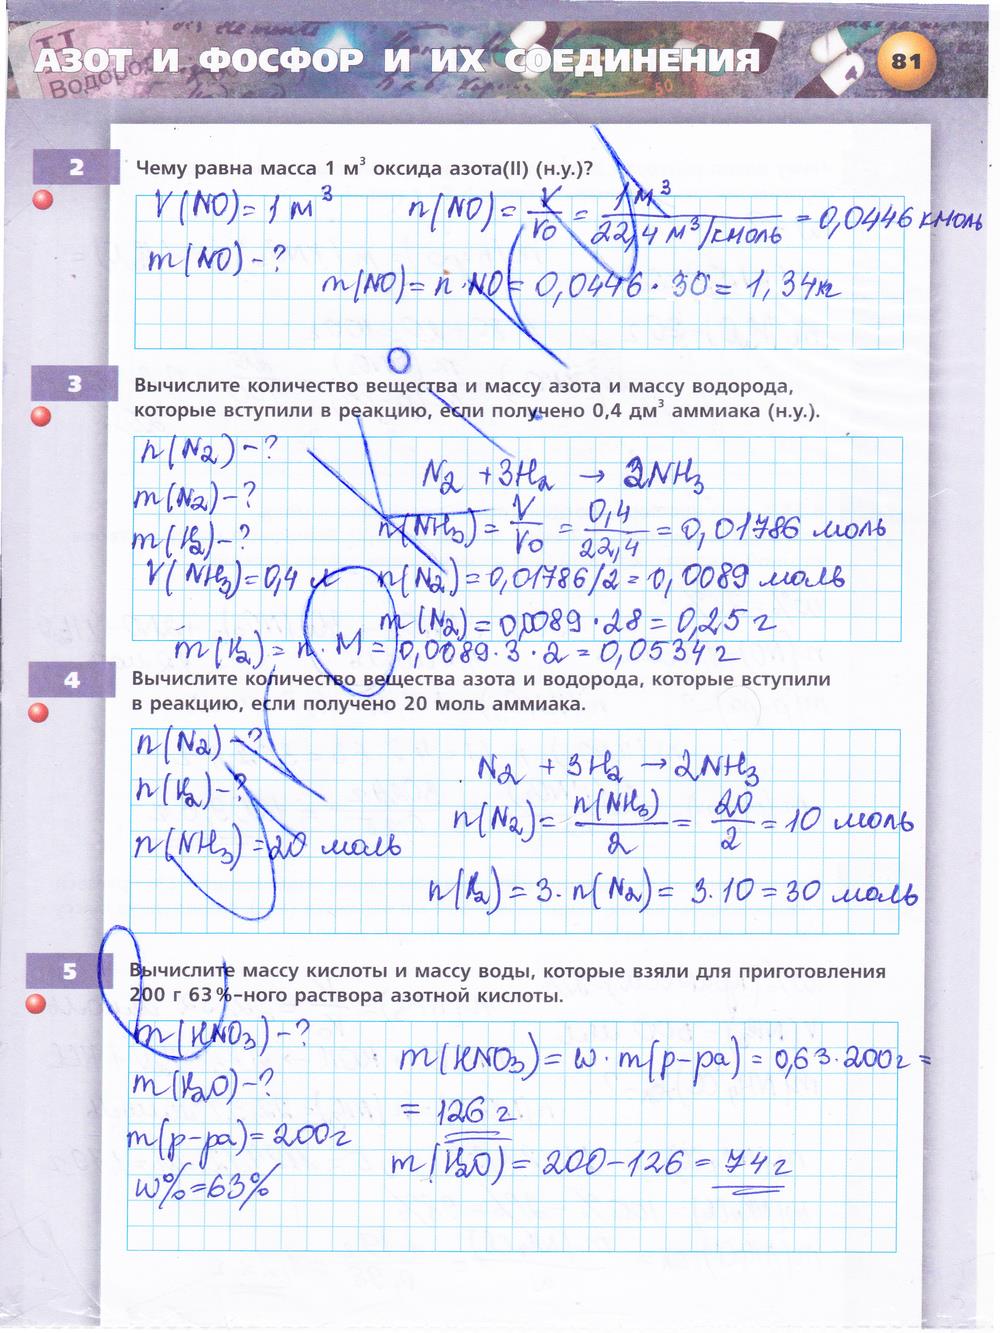 гдз 9 класс тетрадь-тренажёр страница 81 химия Гара